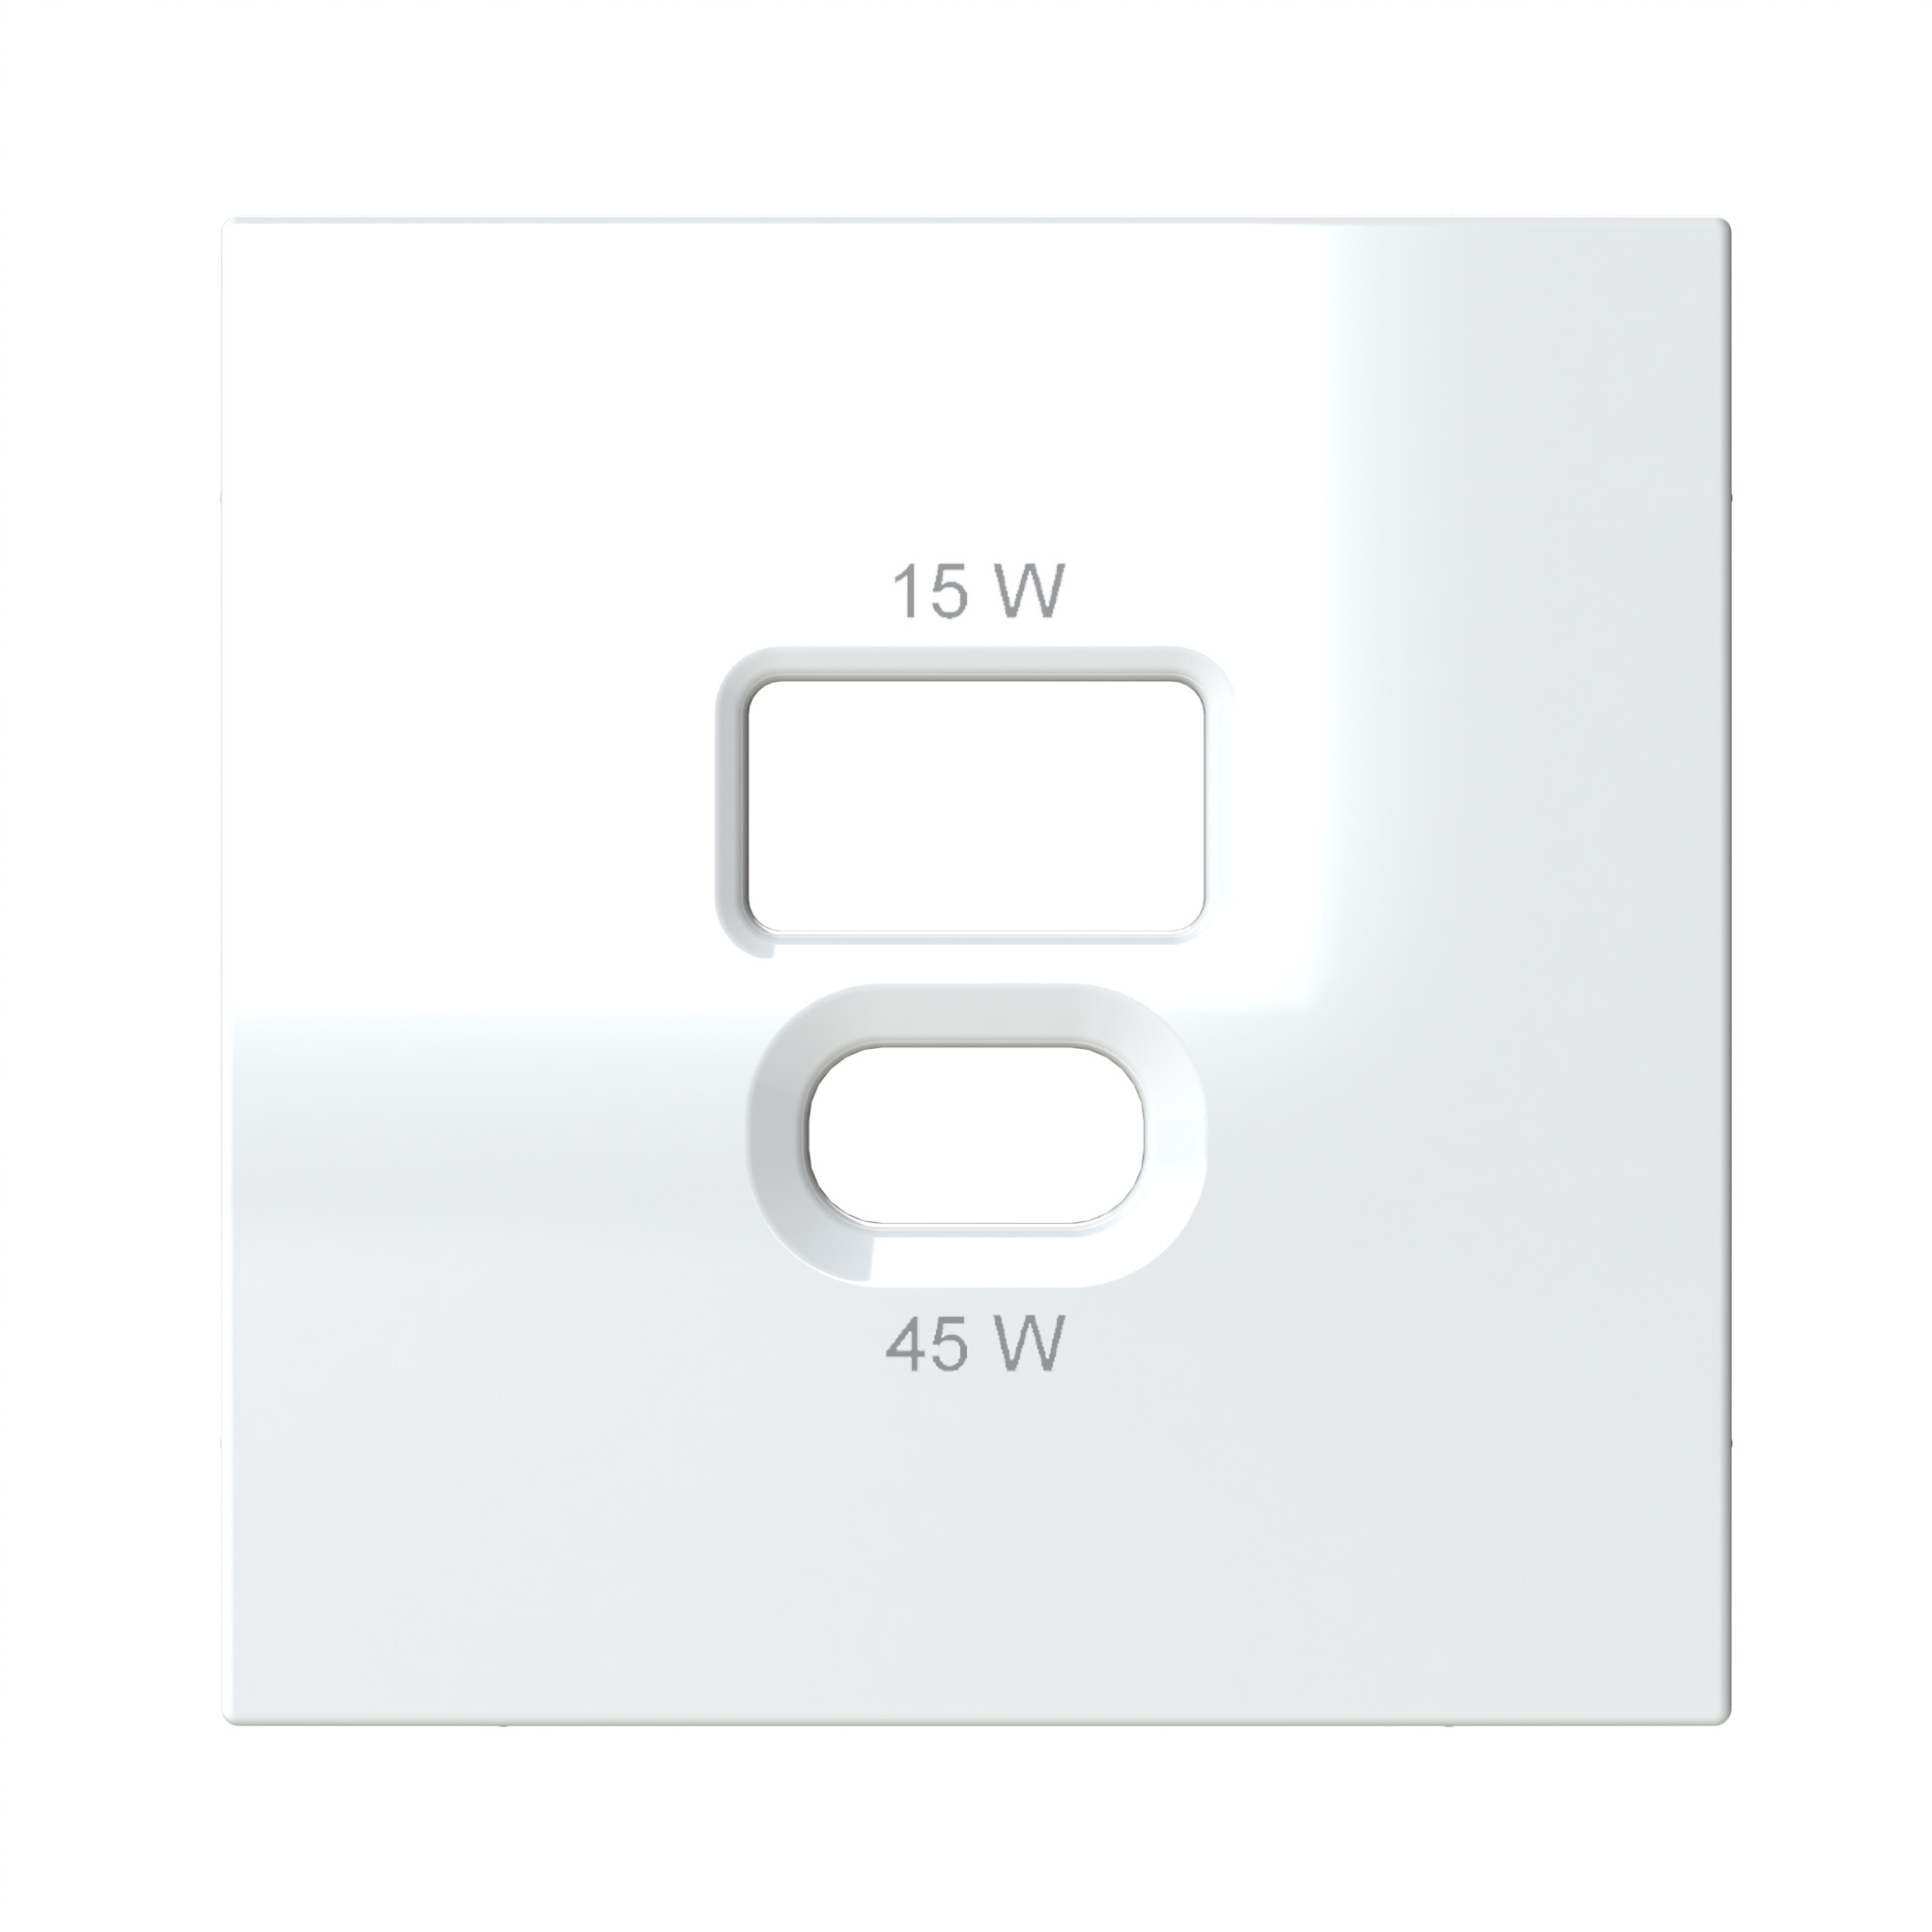 Abdeckplatte für USB-A/C Steckdose, 45 W, 15 W, polarweiß-seidenglanz OPUS 55